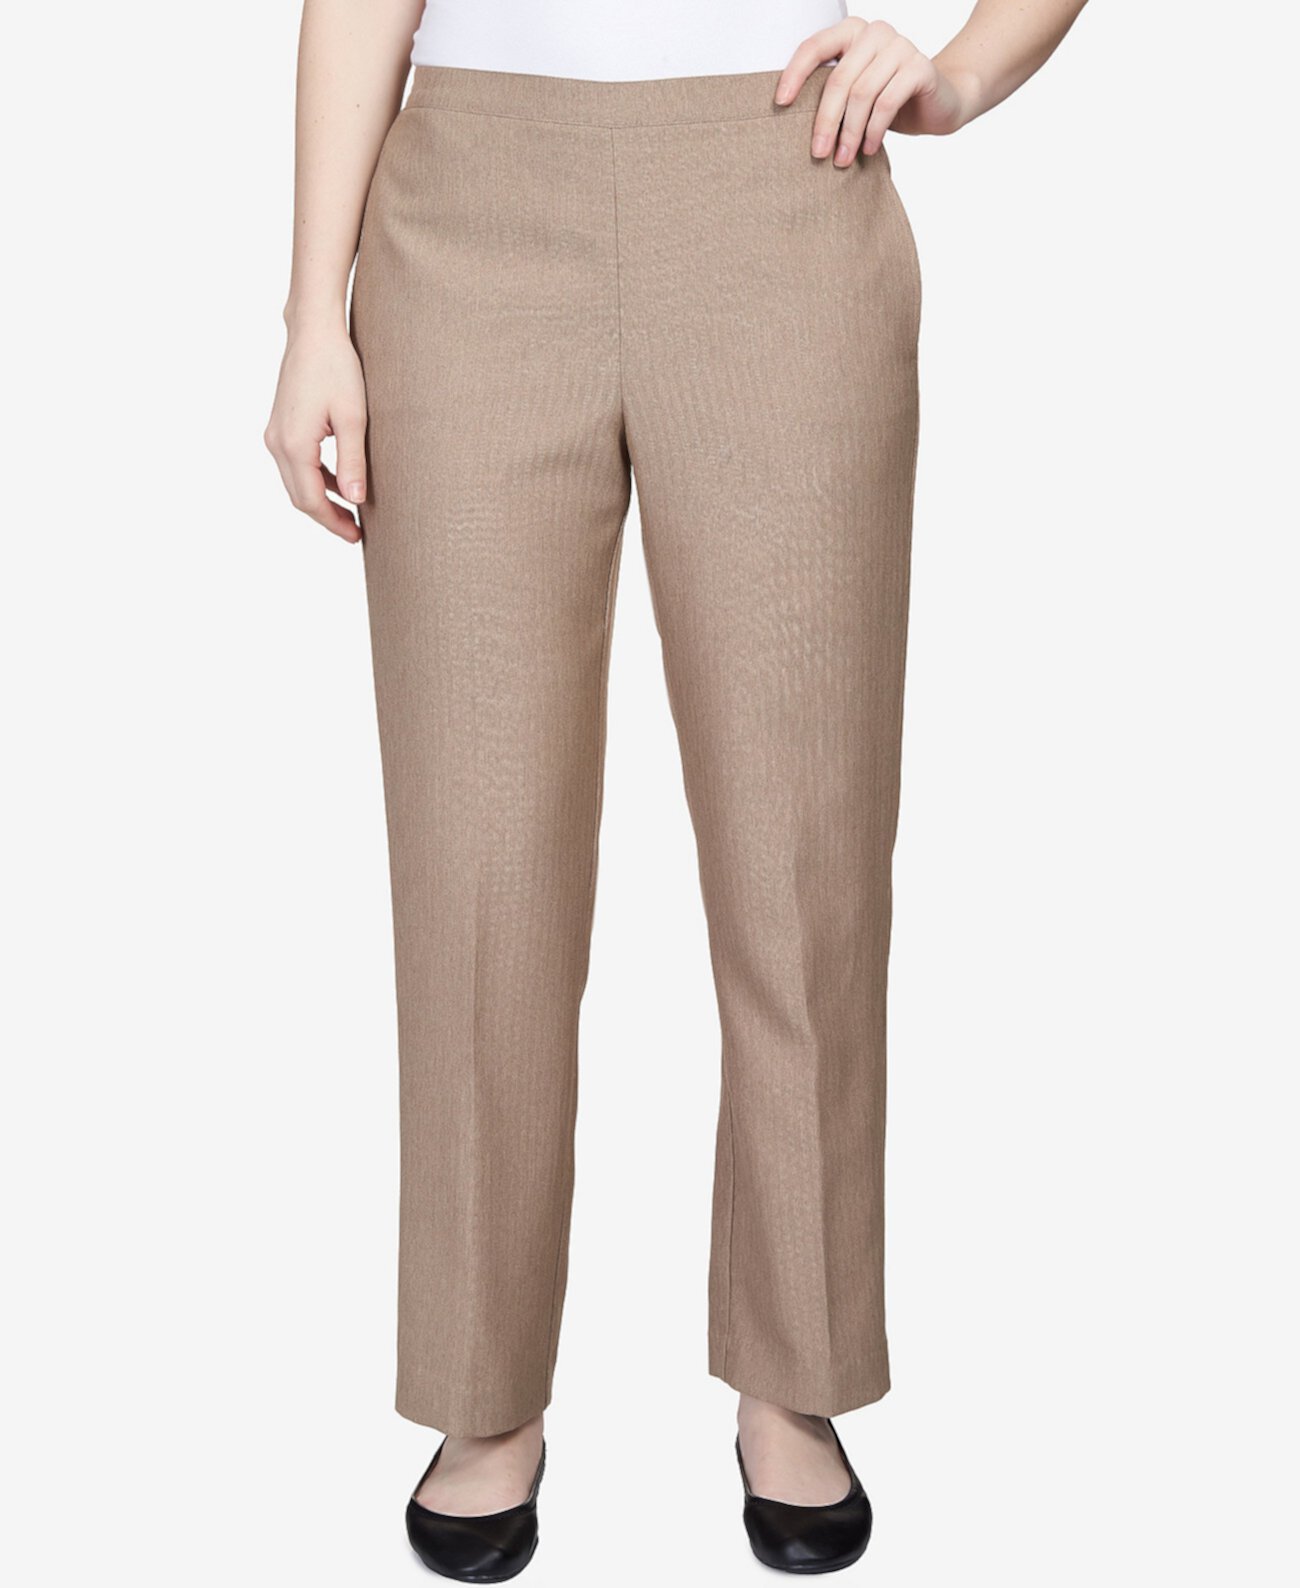 Женские уличные короткие брюки с узором «елочка» Alfred Dunner